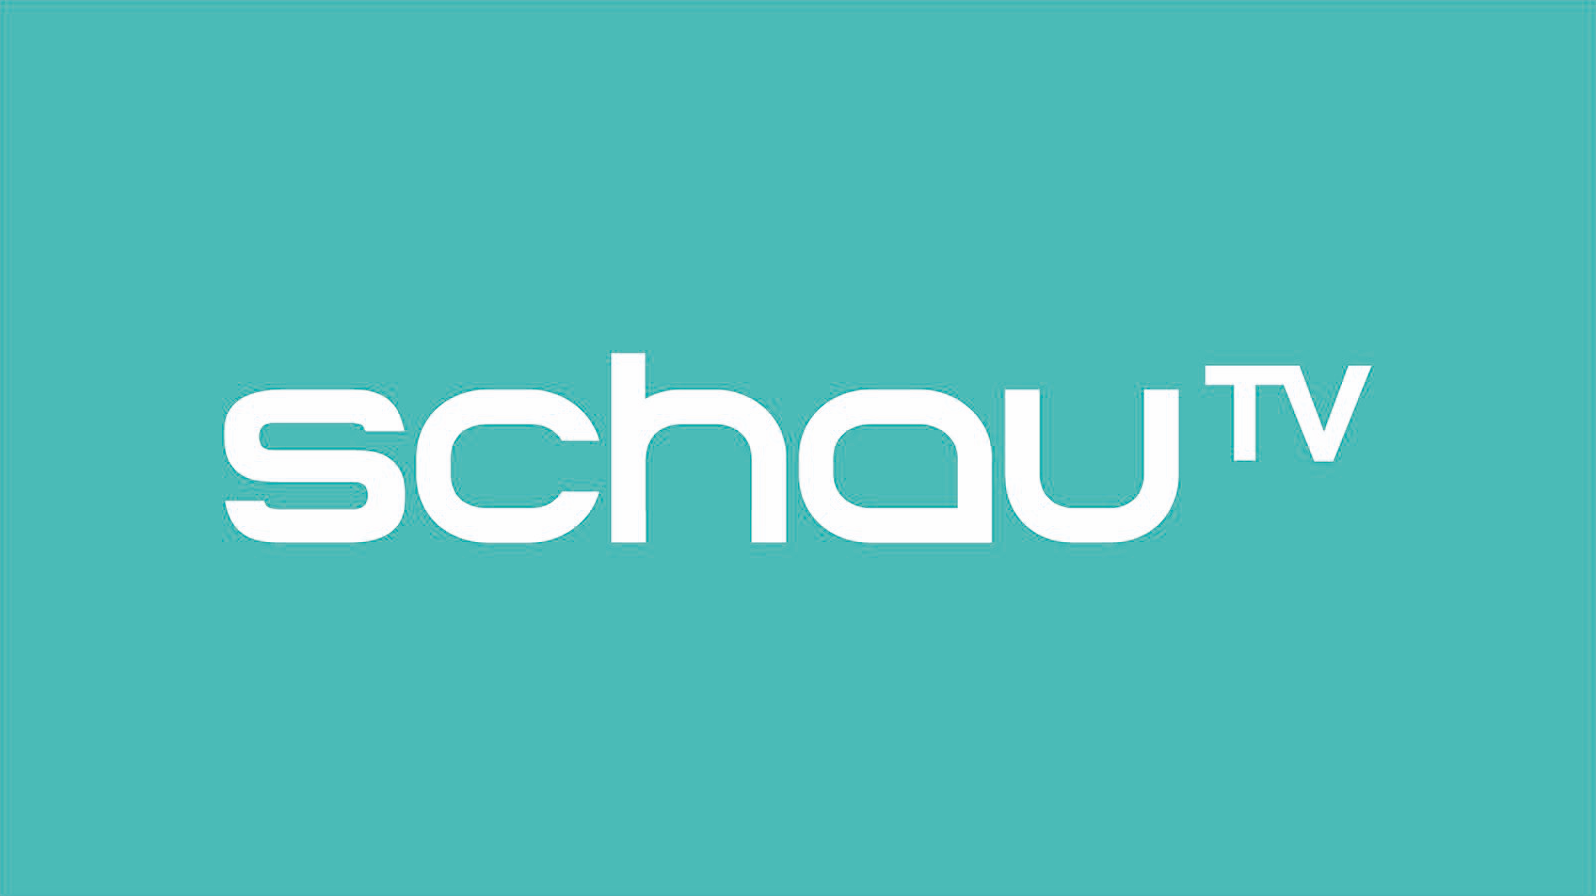 Schautv logo carolin setzer interview